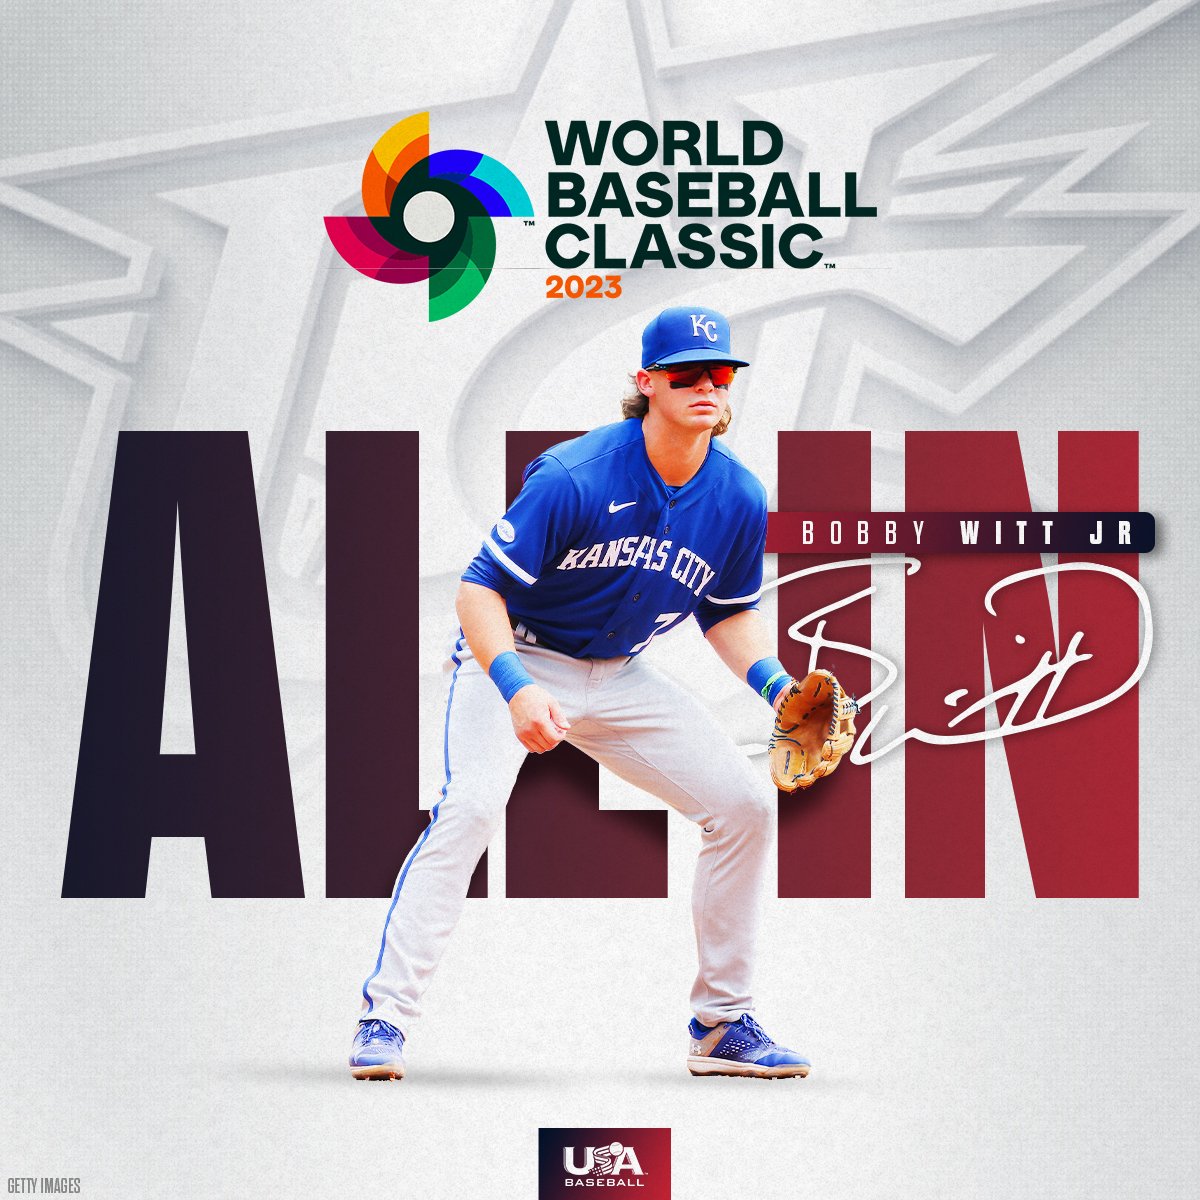 USA Baseball on X: Bobby. Witt. Jr. 👊 The #TeamUSA alum is ALL